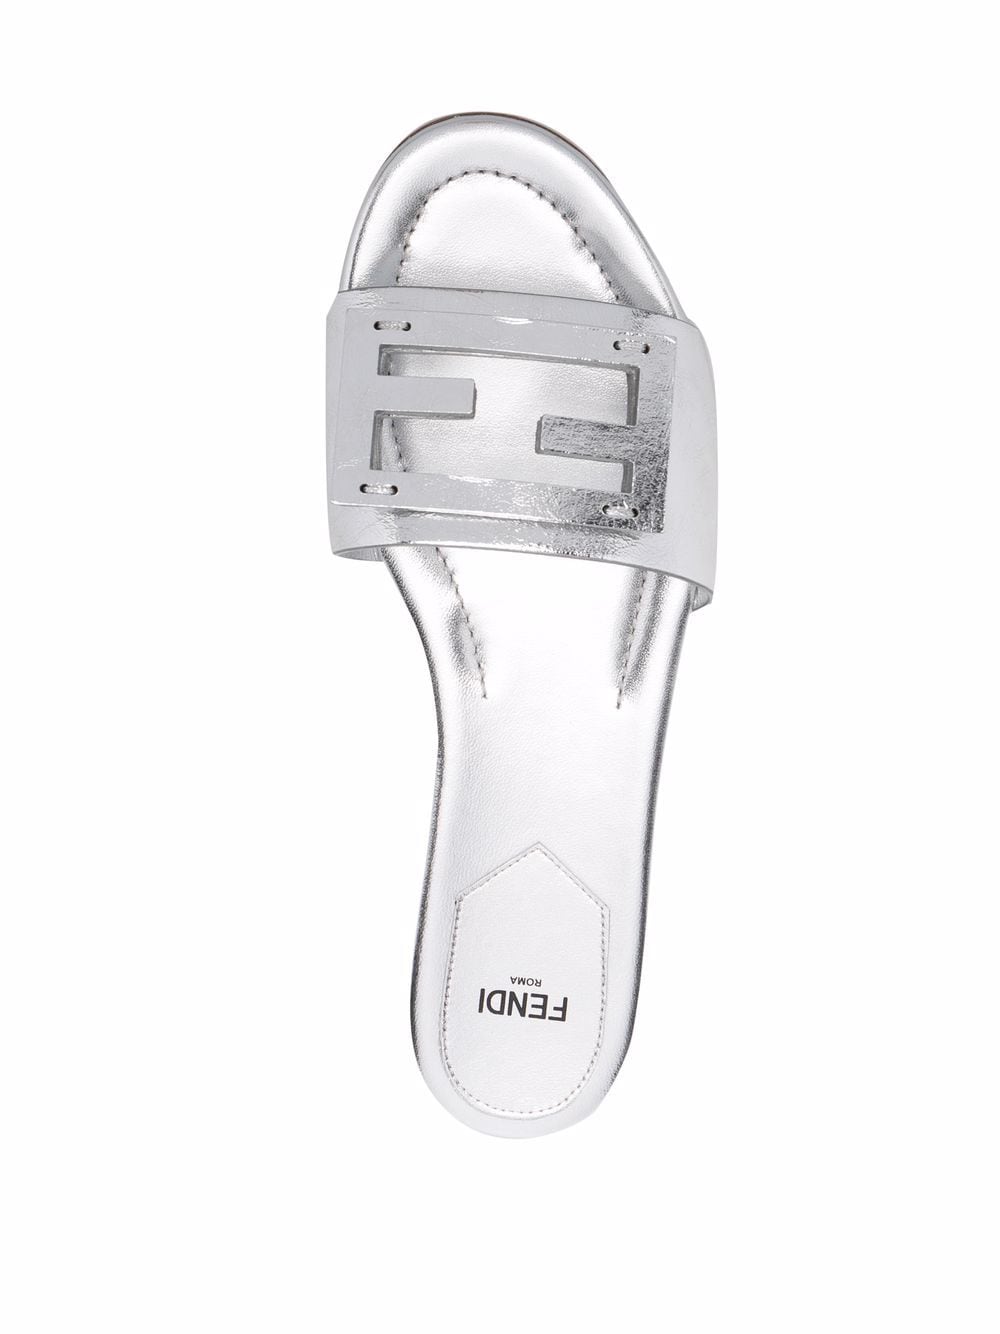 FENDI Baguette slide sandals Silver